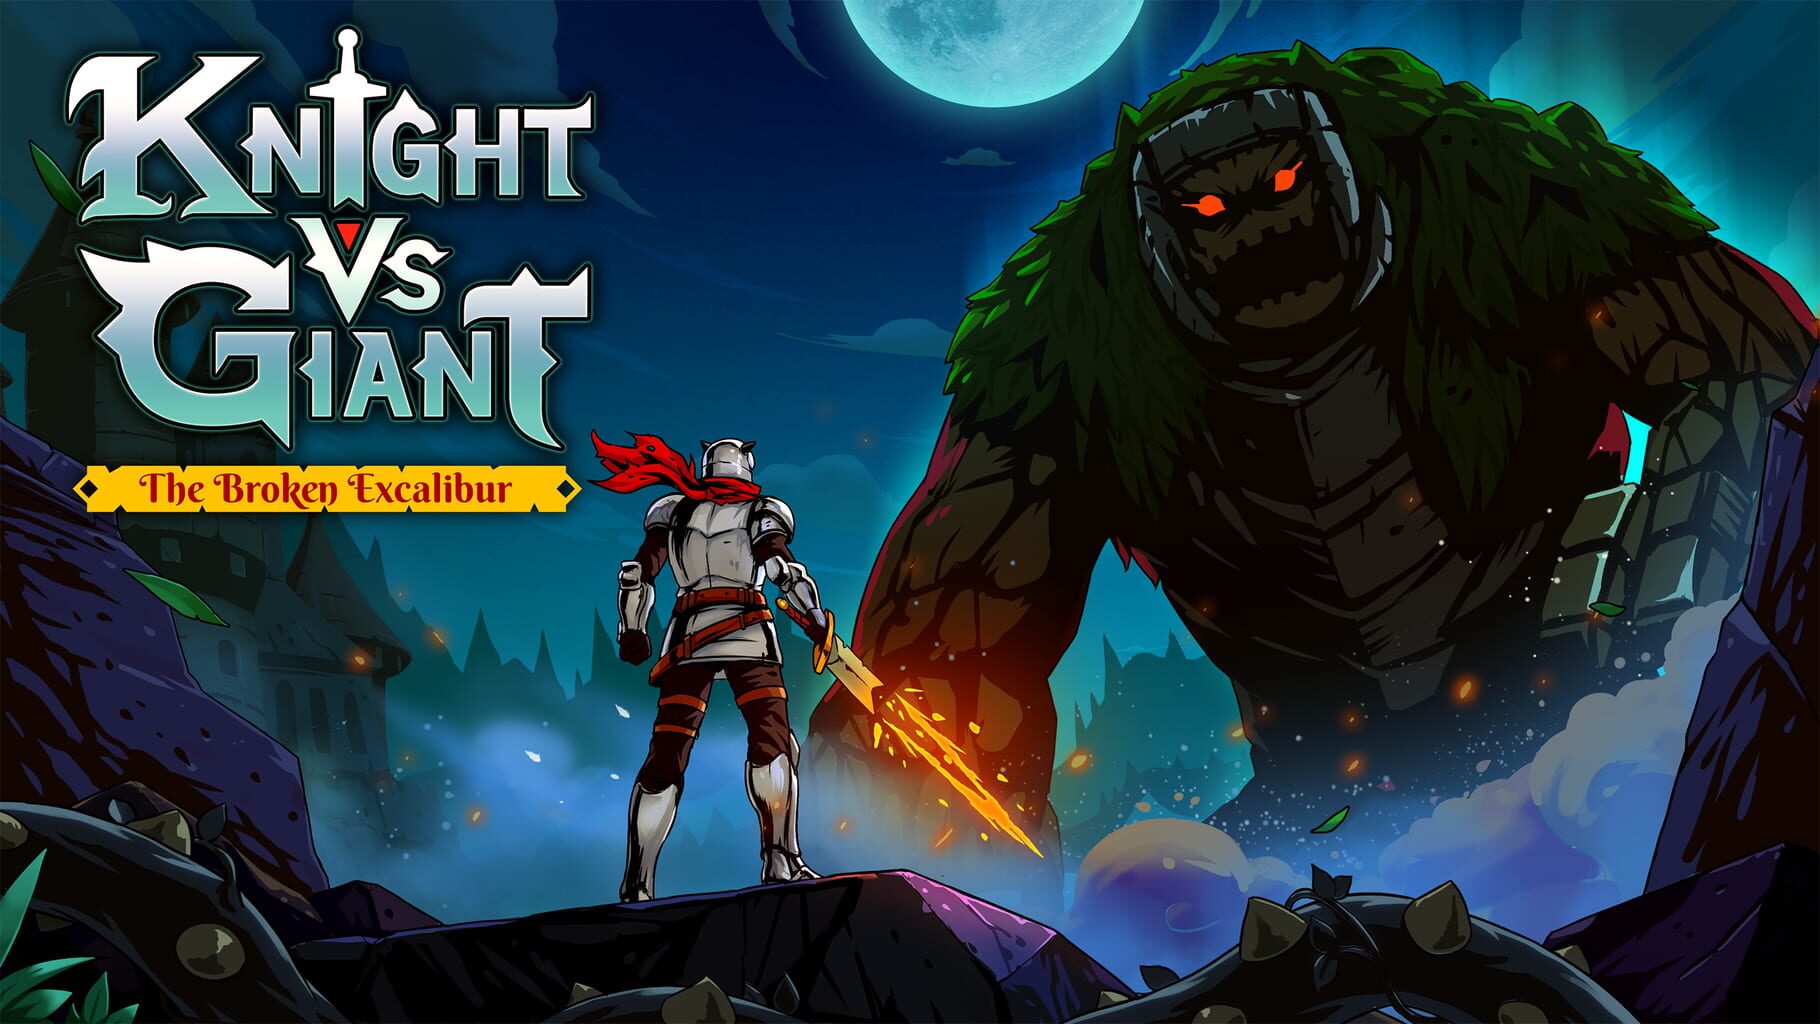 Arte - Knight vs Giant: The Broken Excalibur